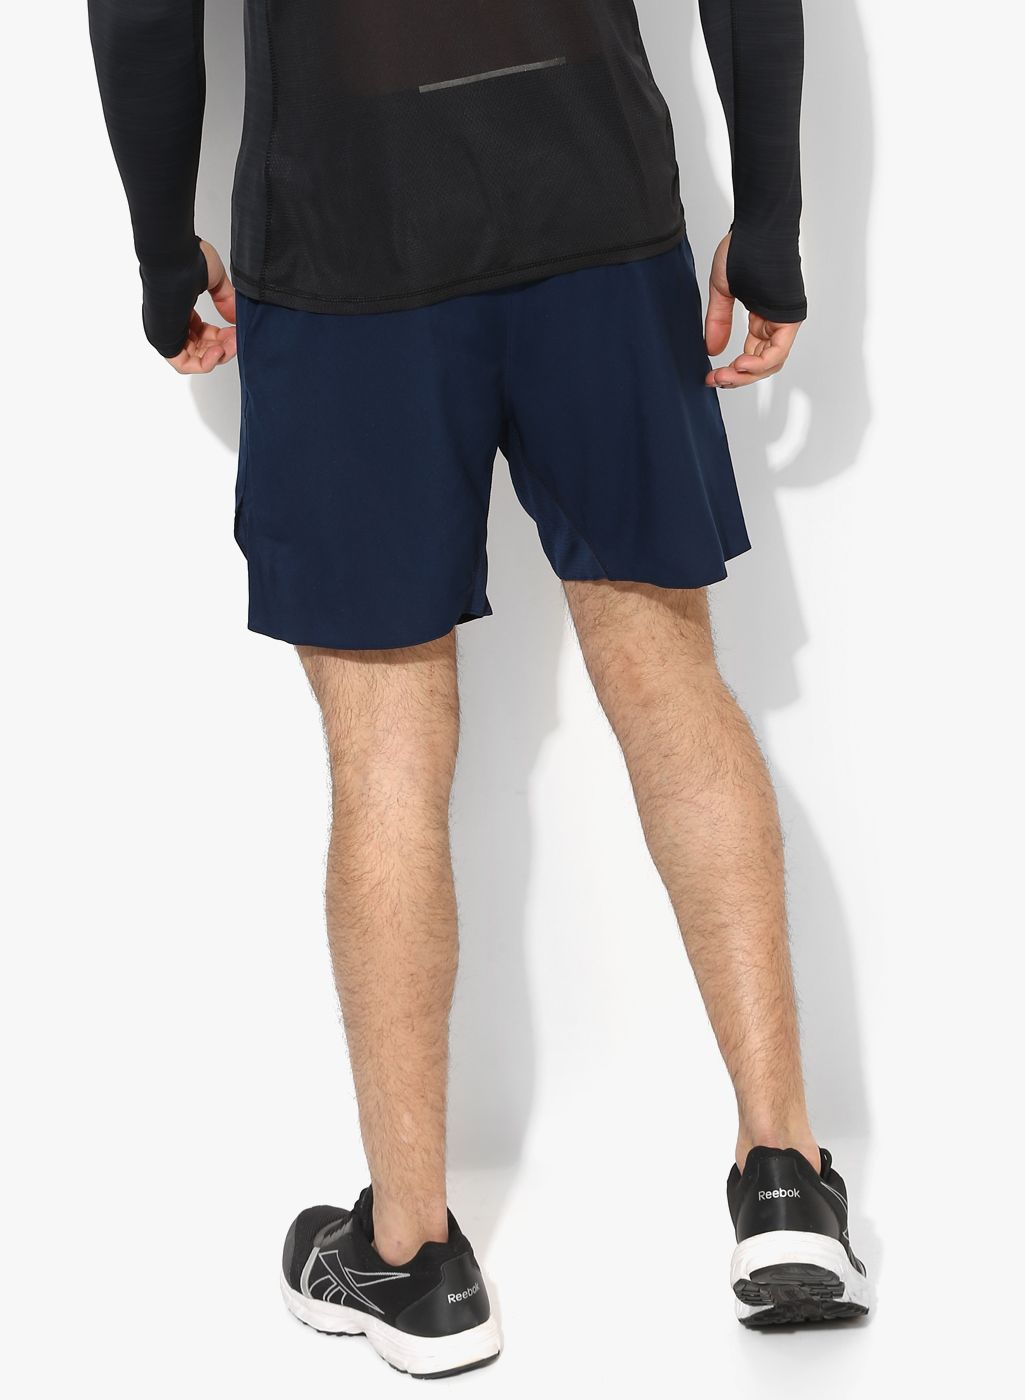 reebok 7 inch compression shorts